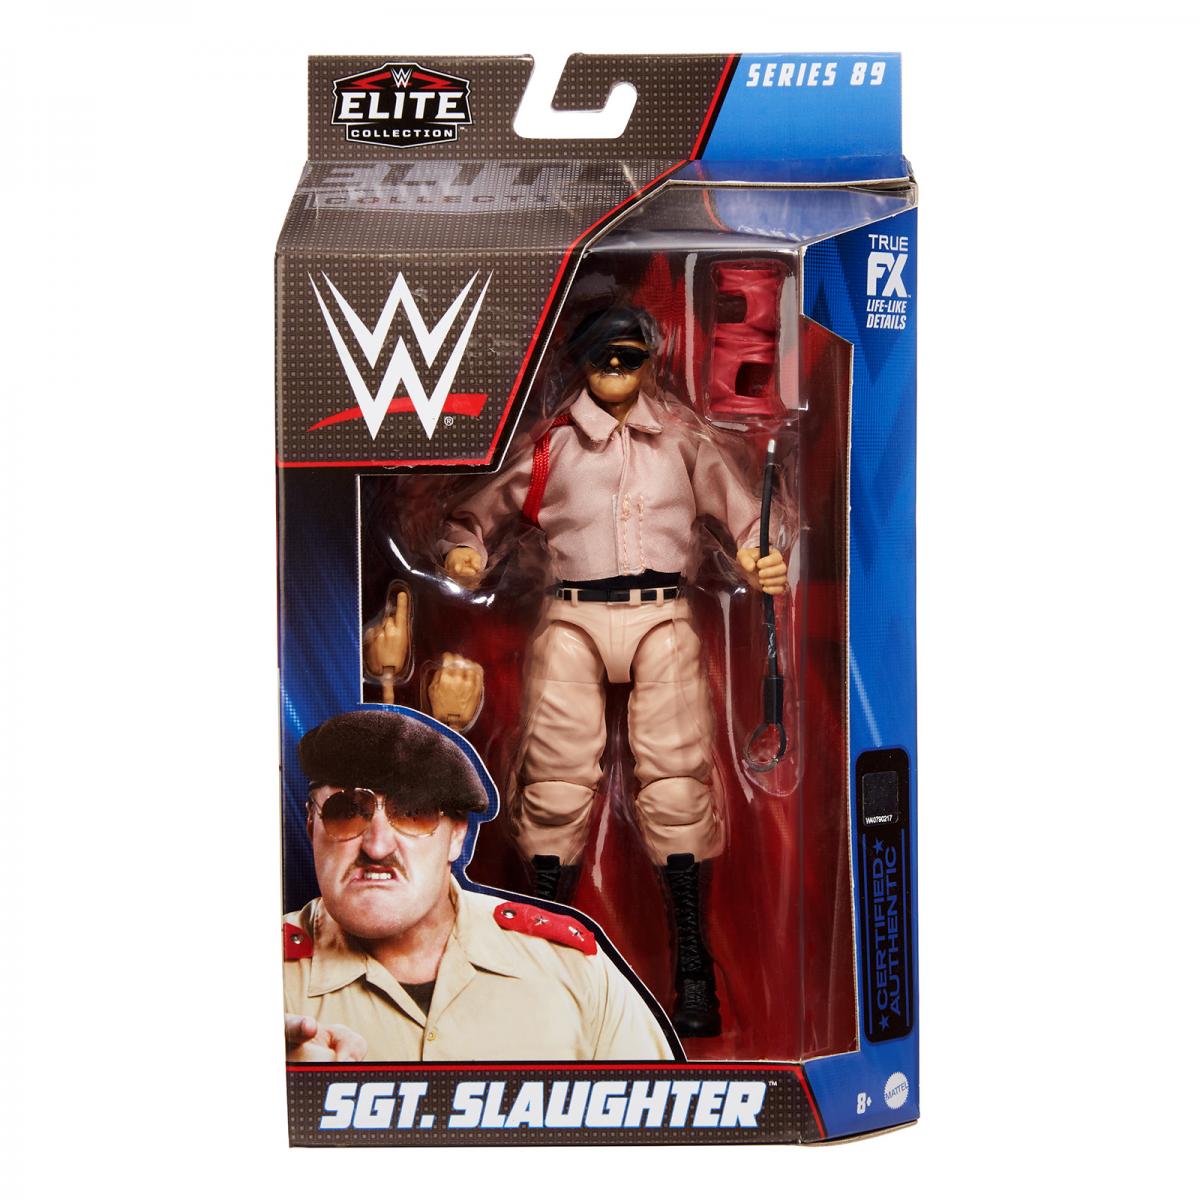 WWE Mattel Elite Collection Series 89 Sgt. Slaughter